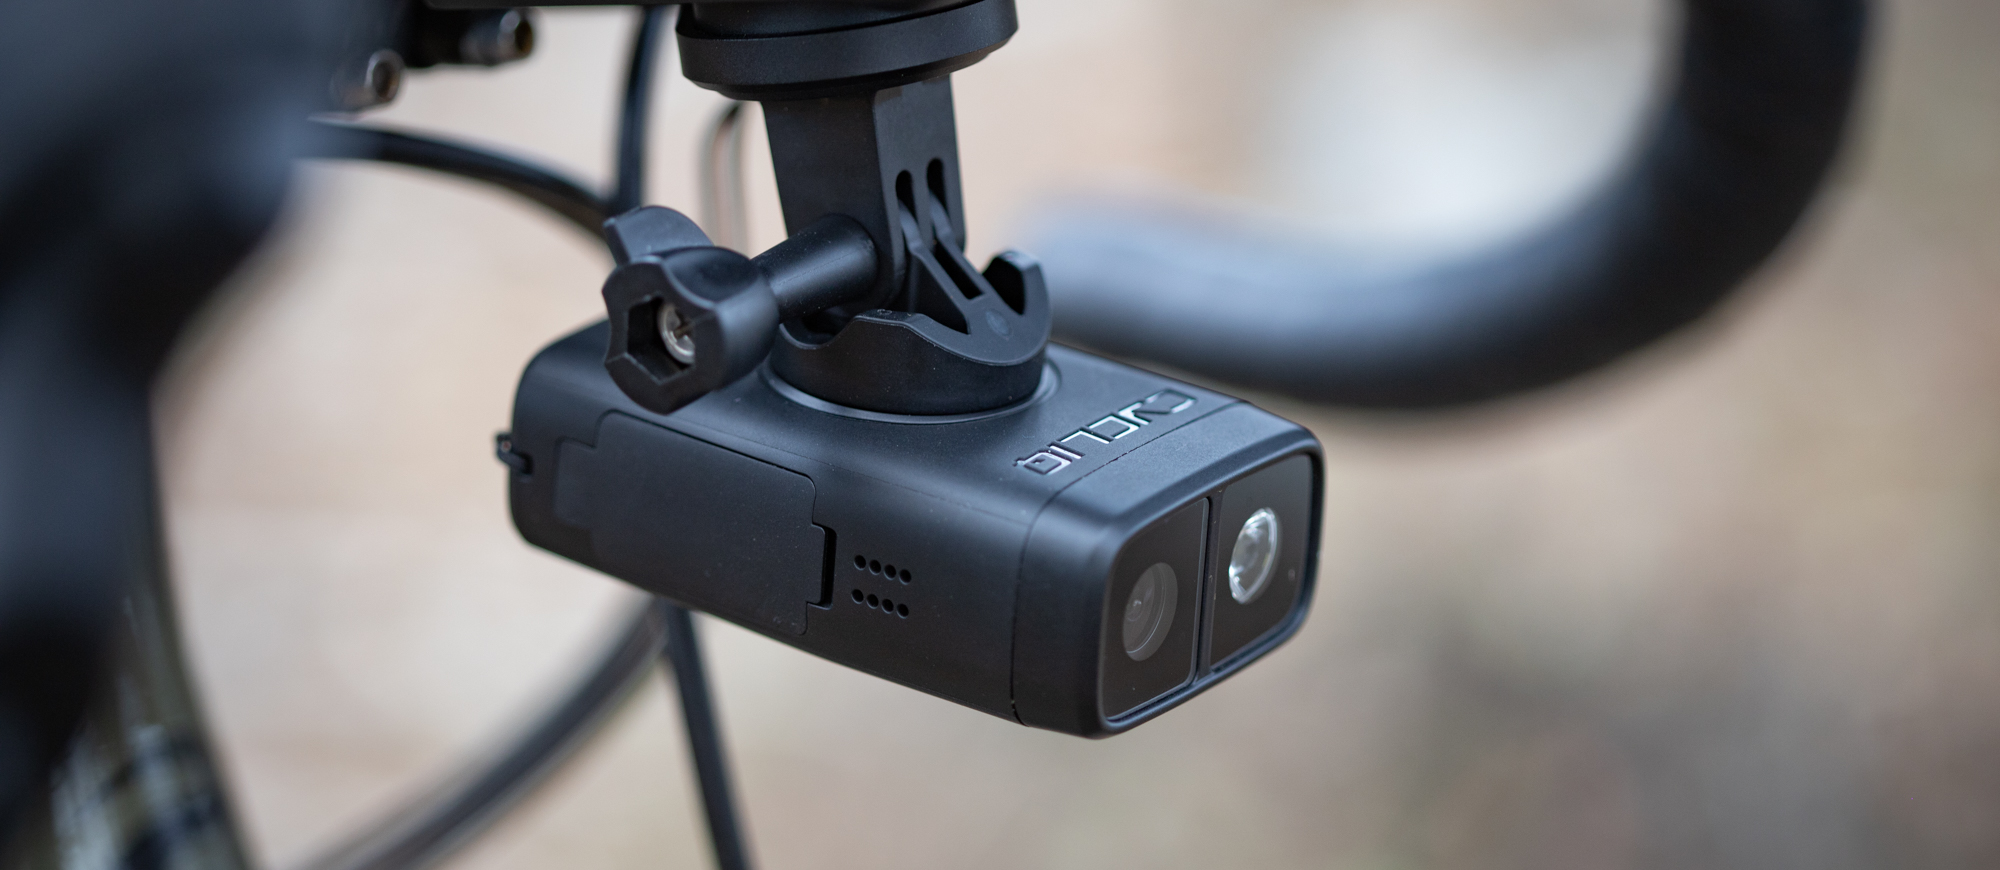 Cycliq Fly 12 Sport review: A dashcam for your bike | Cyclingnews